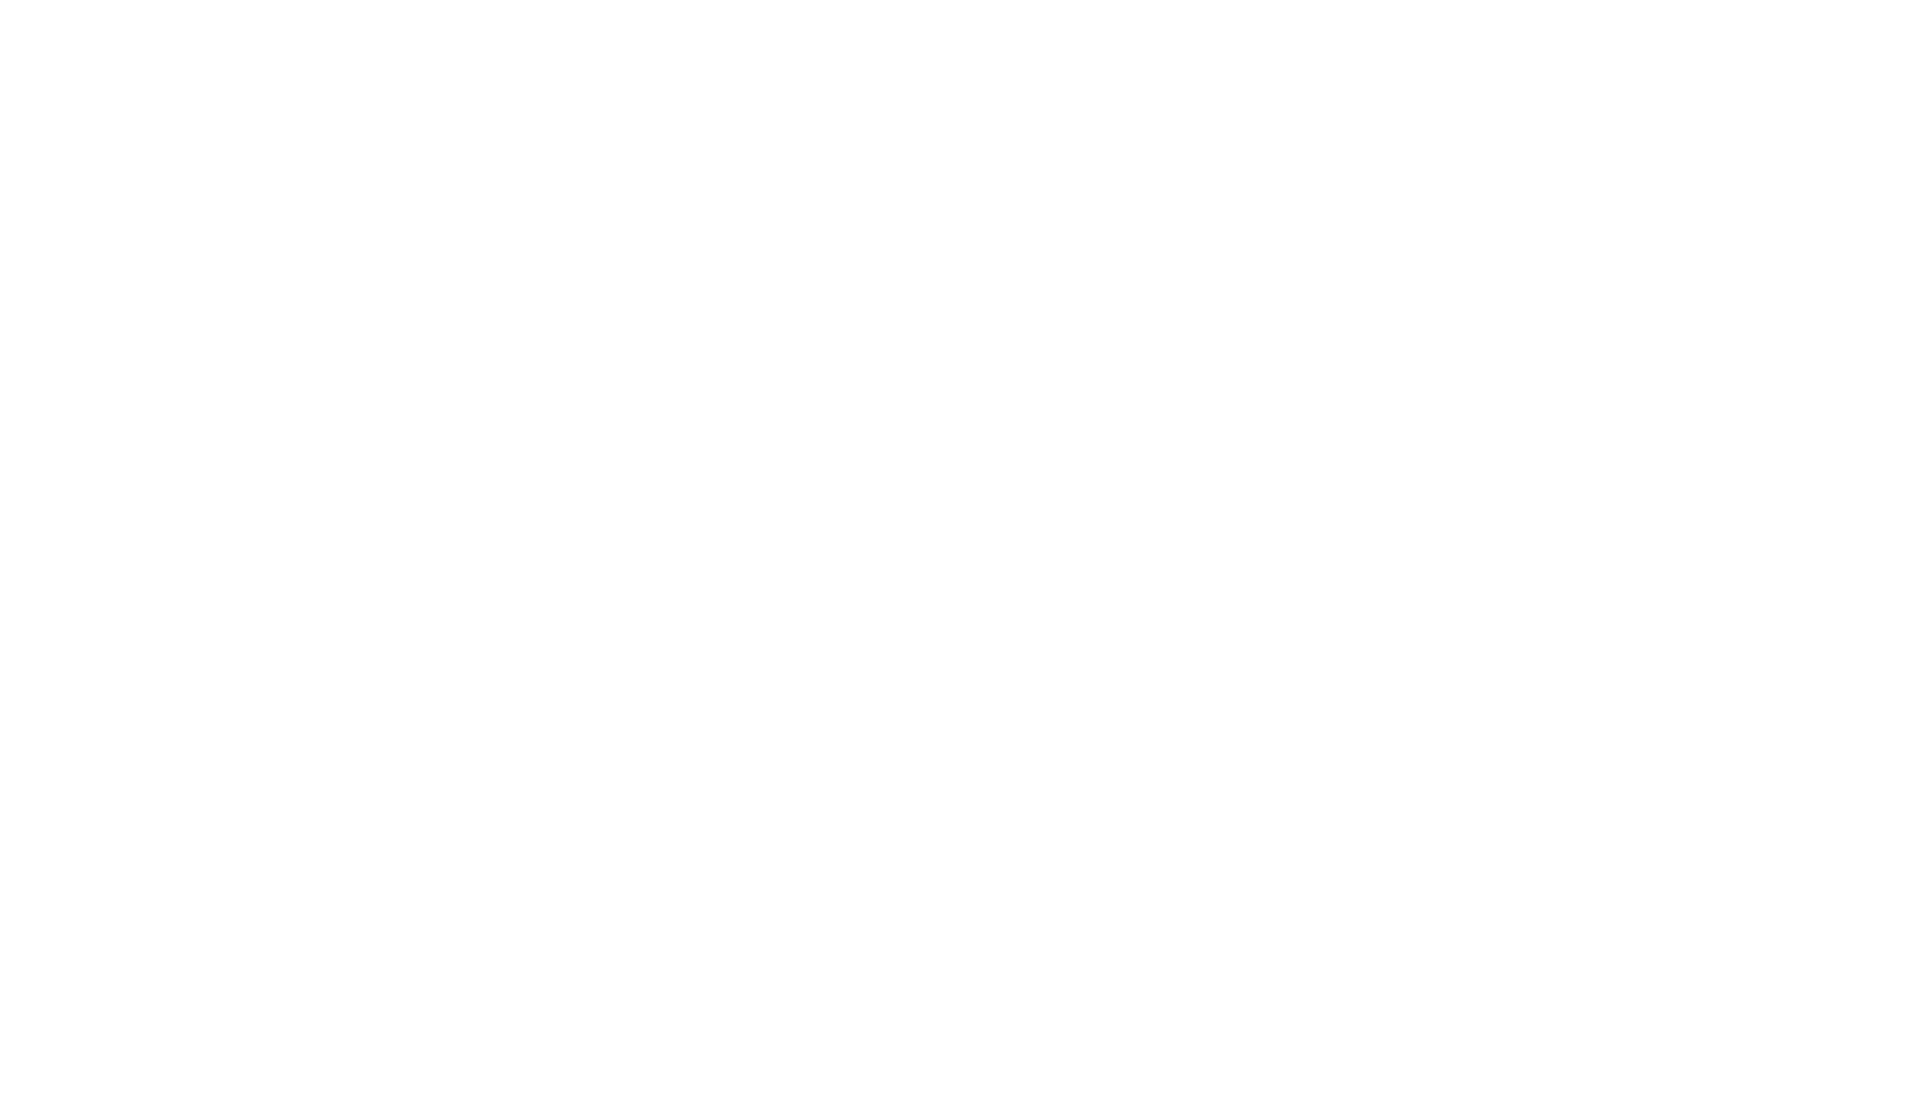 The 78 Pub